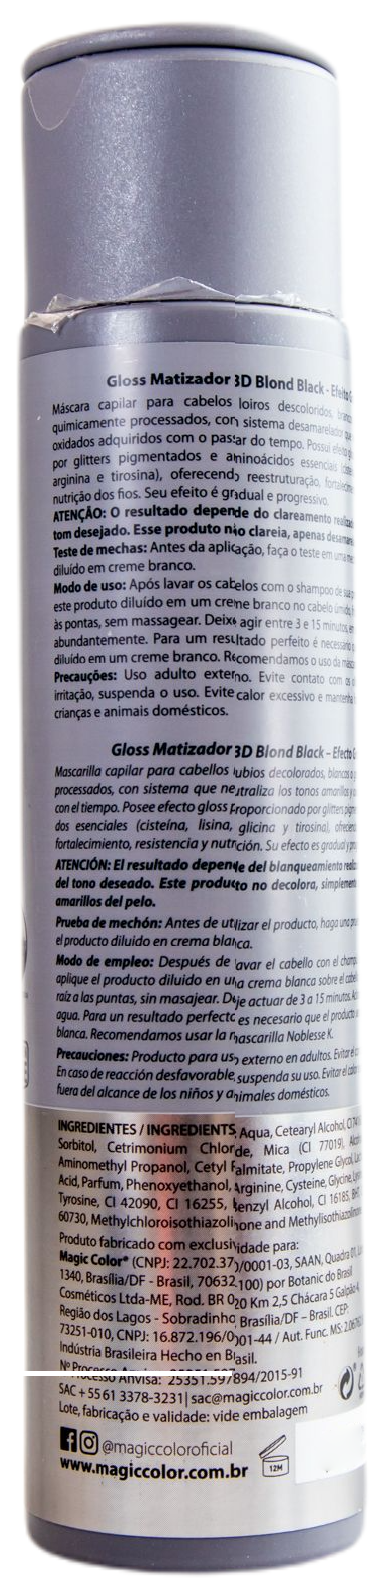 Magic Color Brazilian Keratin Treatment 3D Blond Black Treatment Tinting Gloss Mask Graphite Effect 300ml - Magic Color